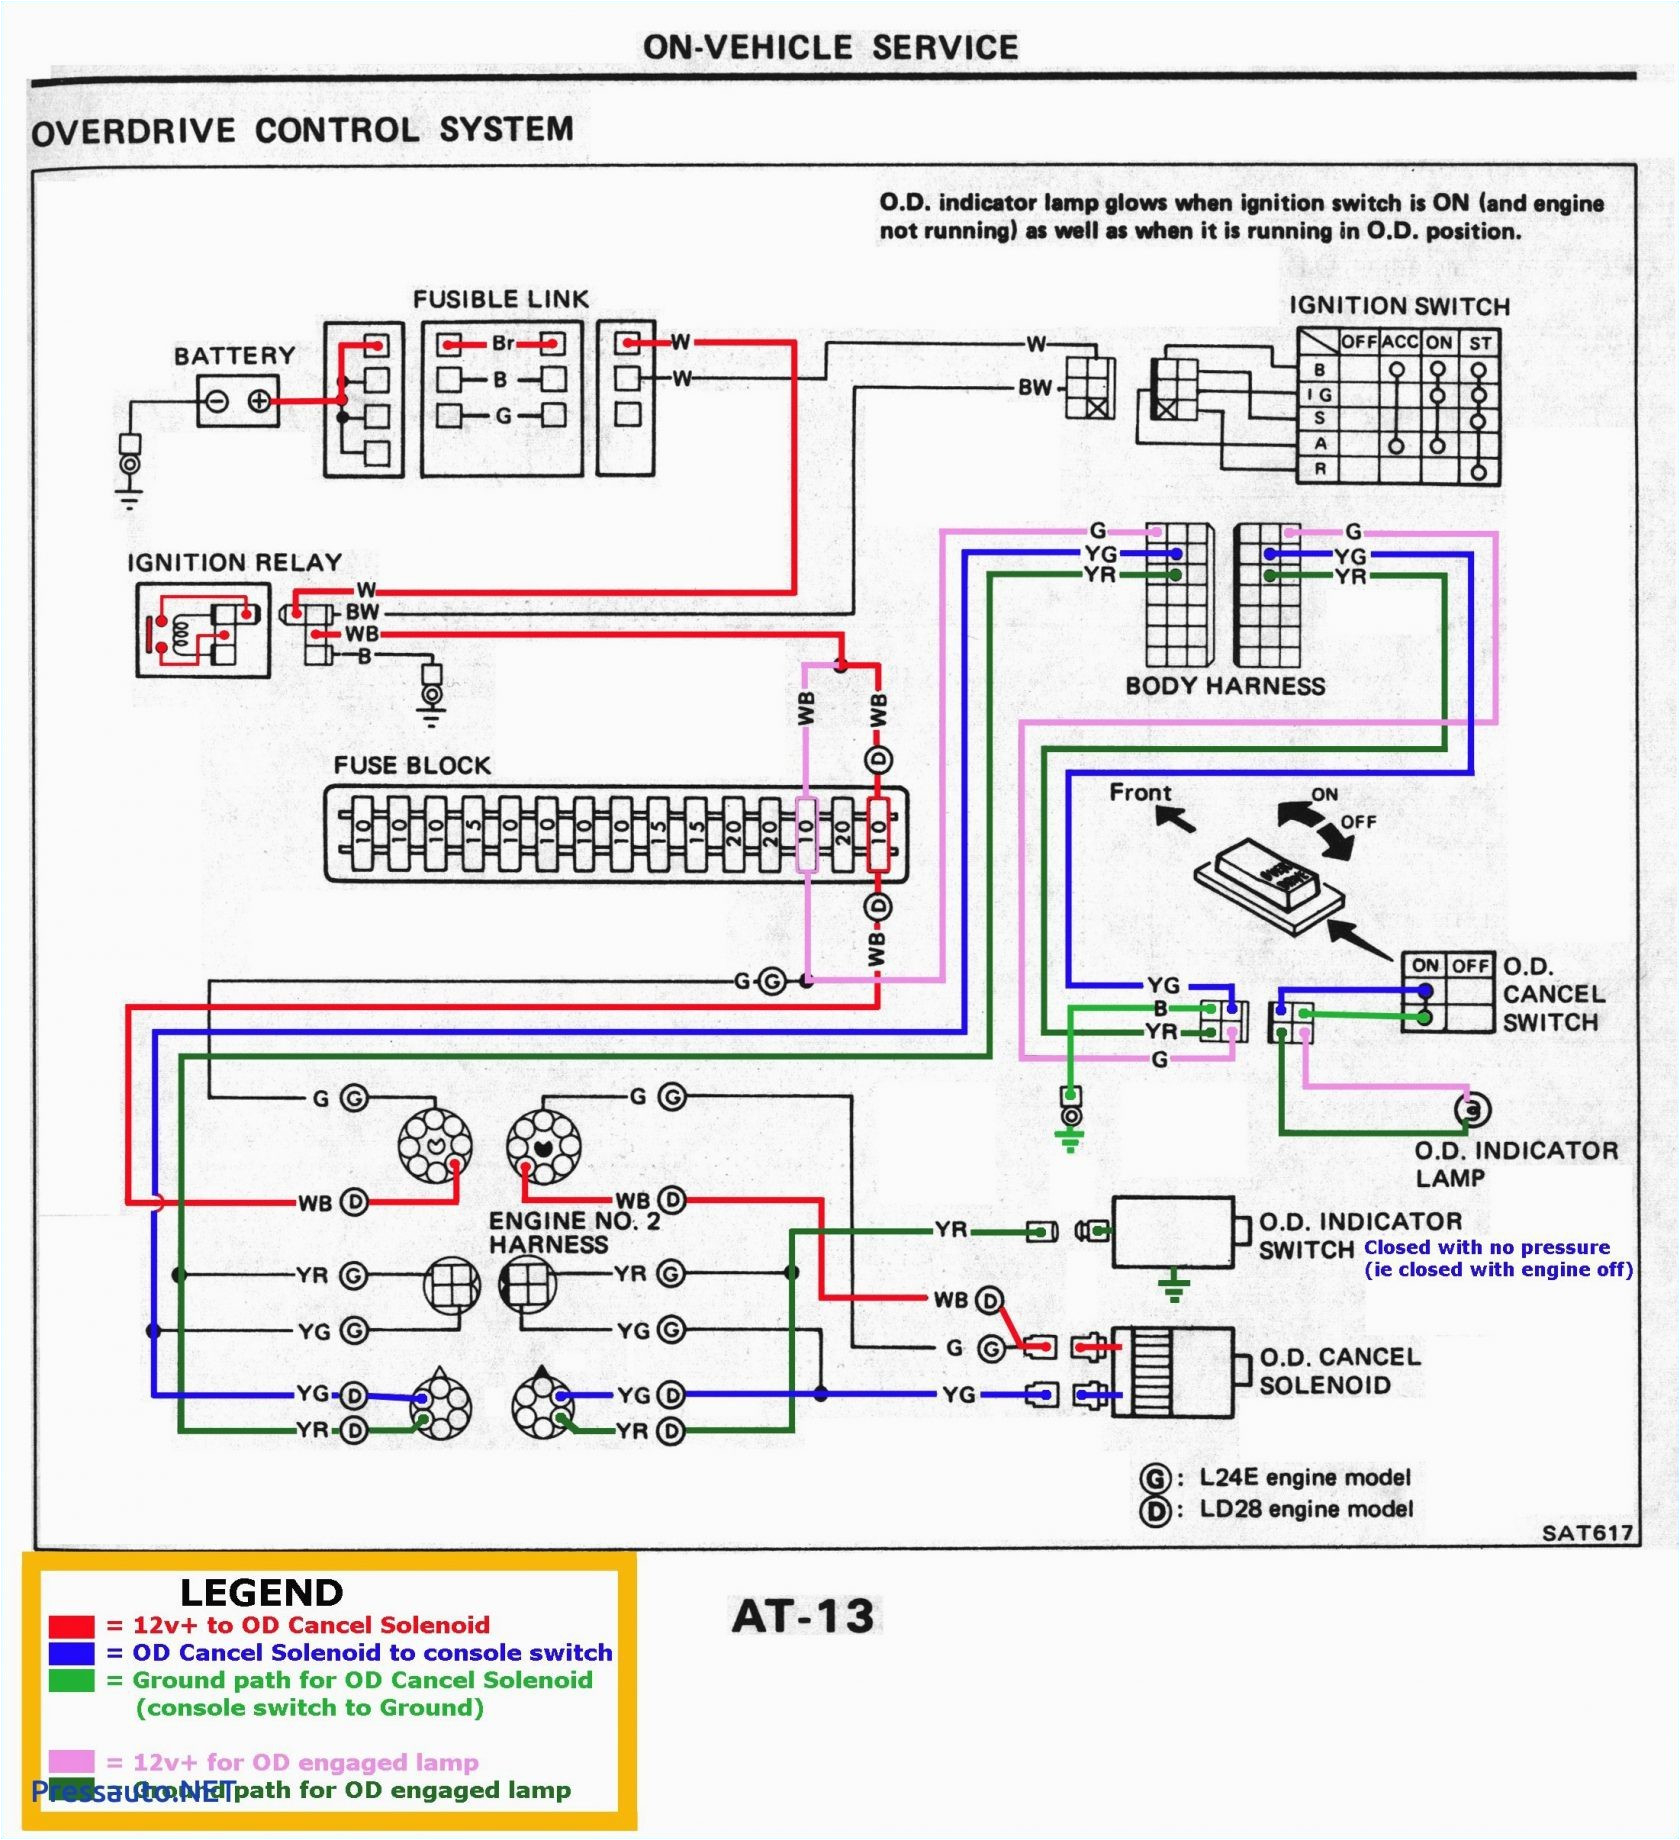 1999 Mustang Wiring Diagram Wiring Diagram On Infiniti G35 Fuse Diagram 1994 Mustang Gt Fog